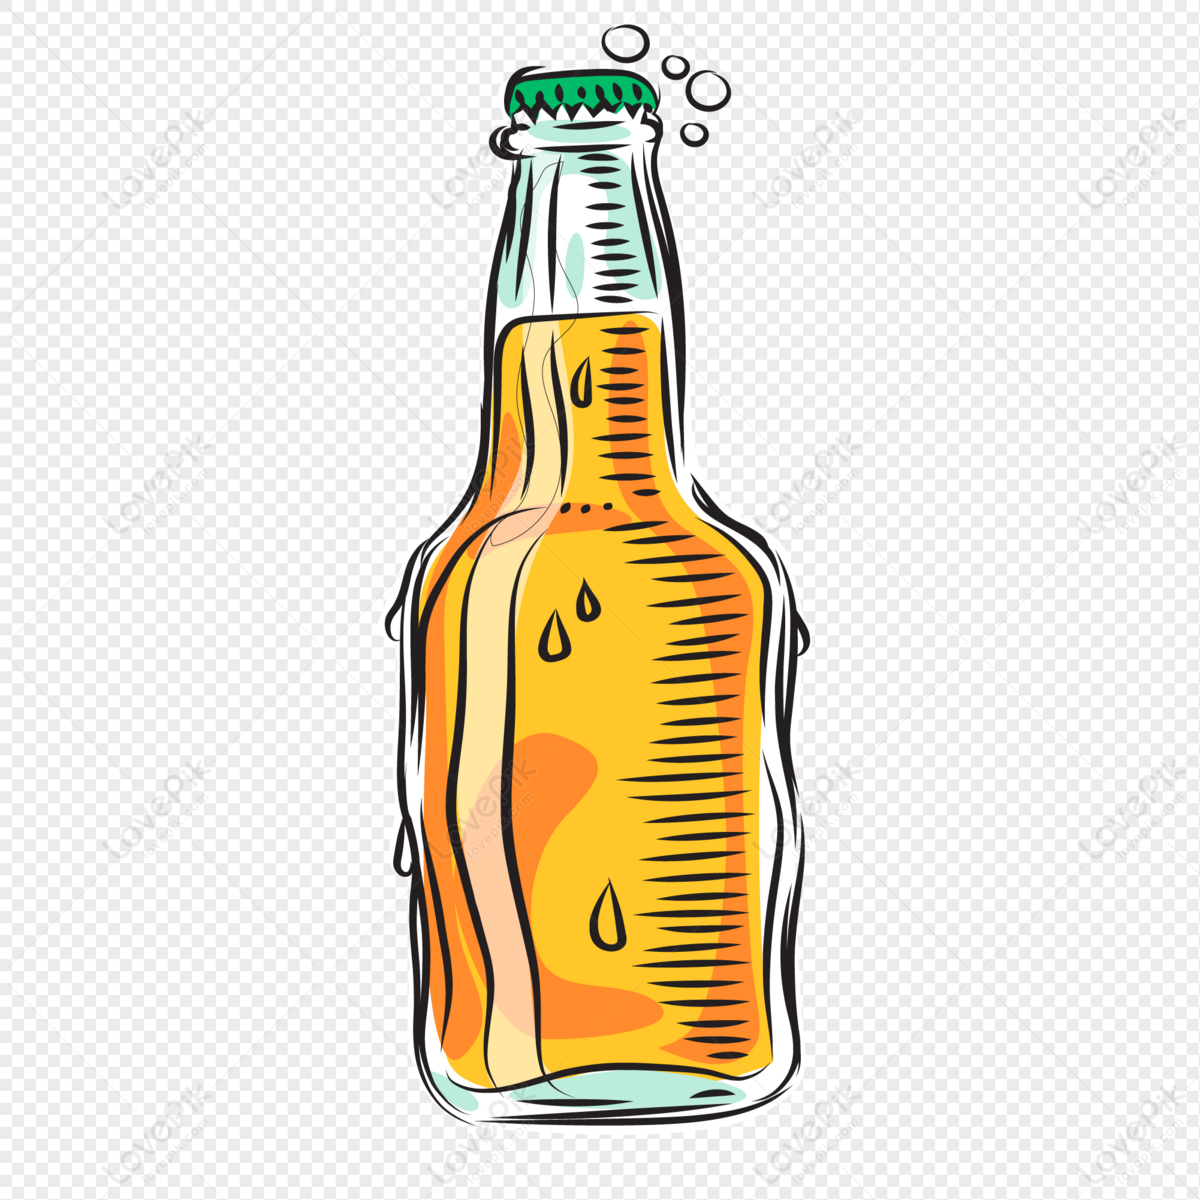 Beer bottle mug can sketch Royalty Free Vector Image